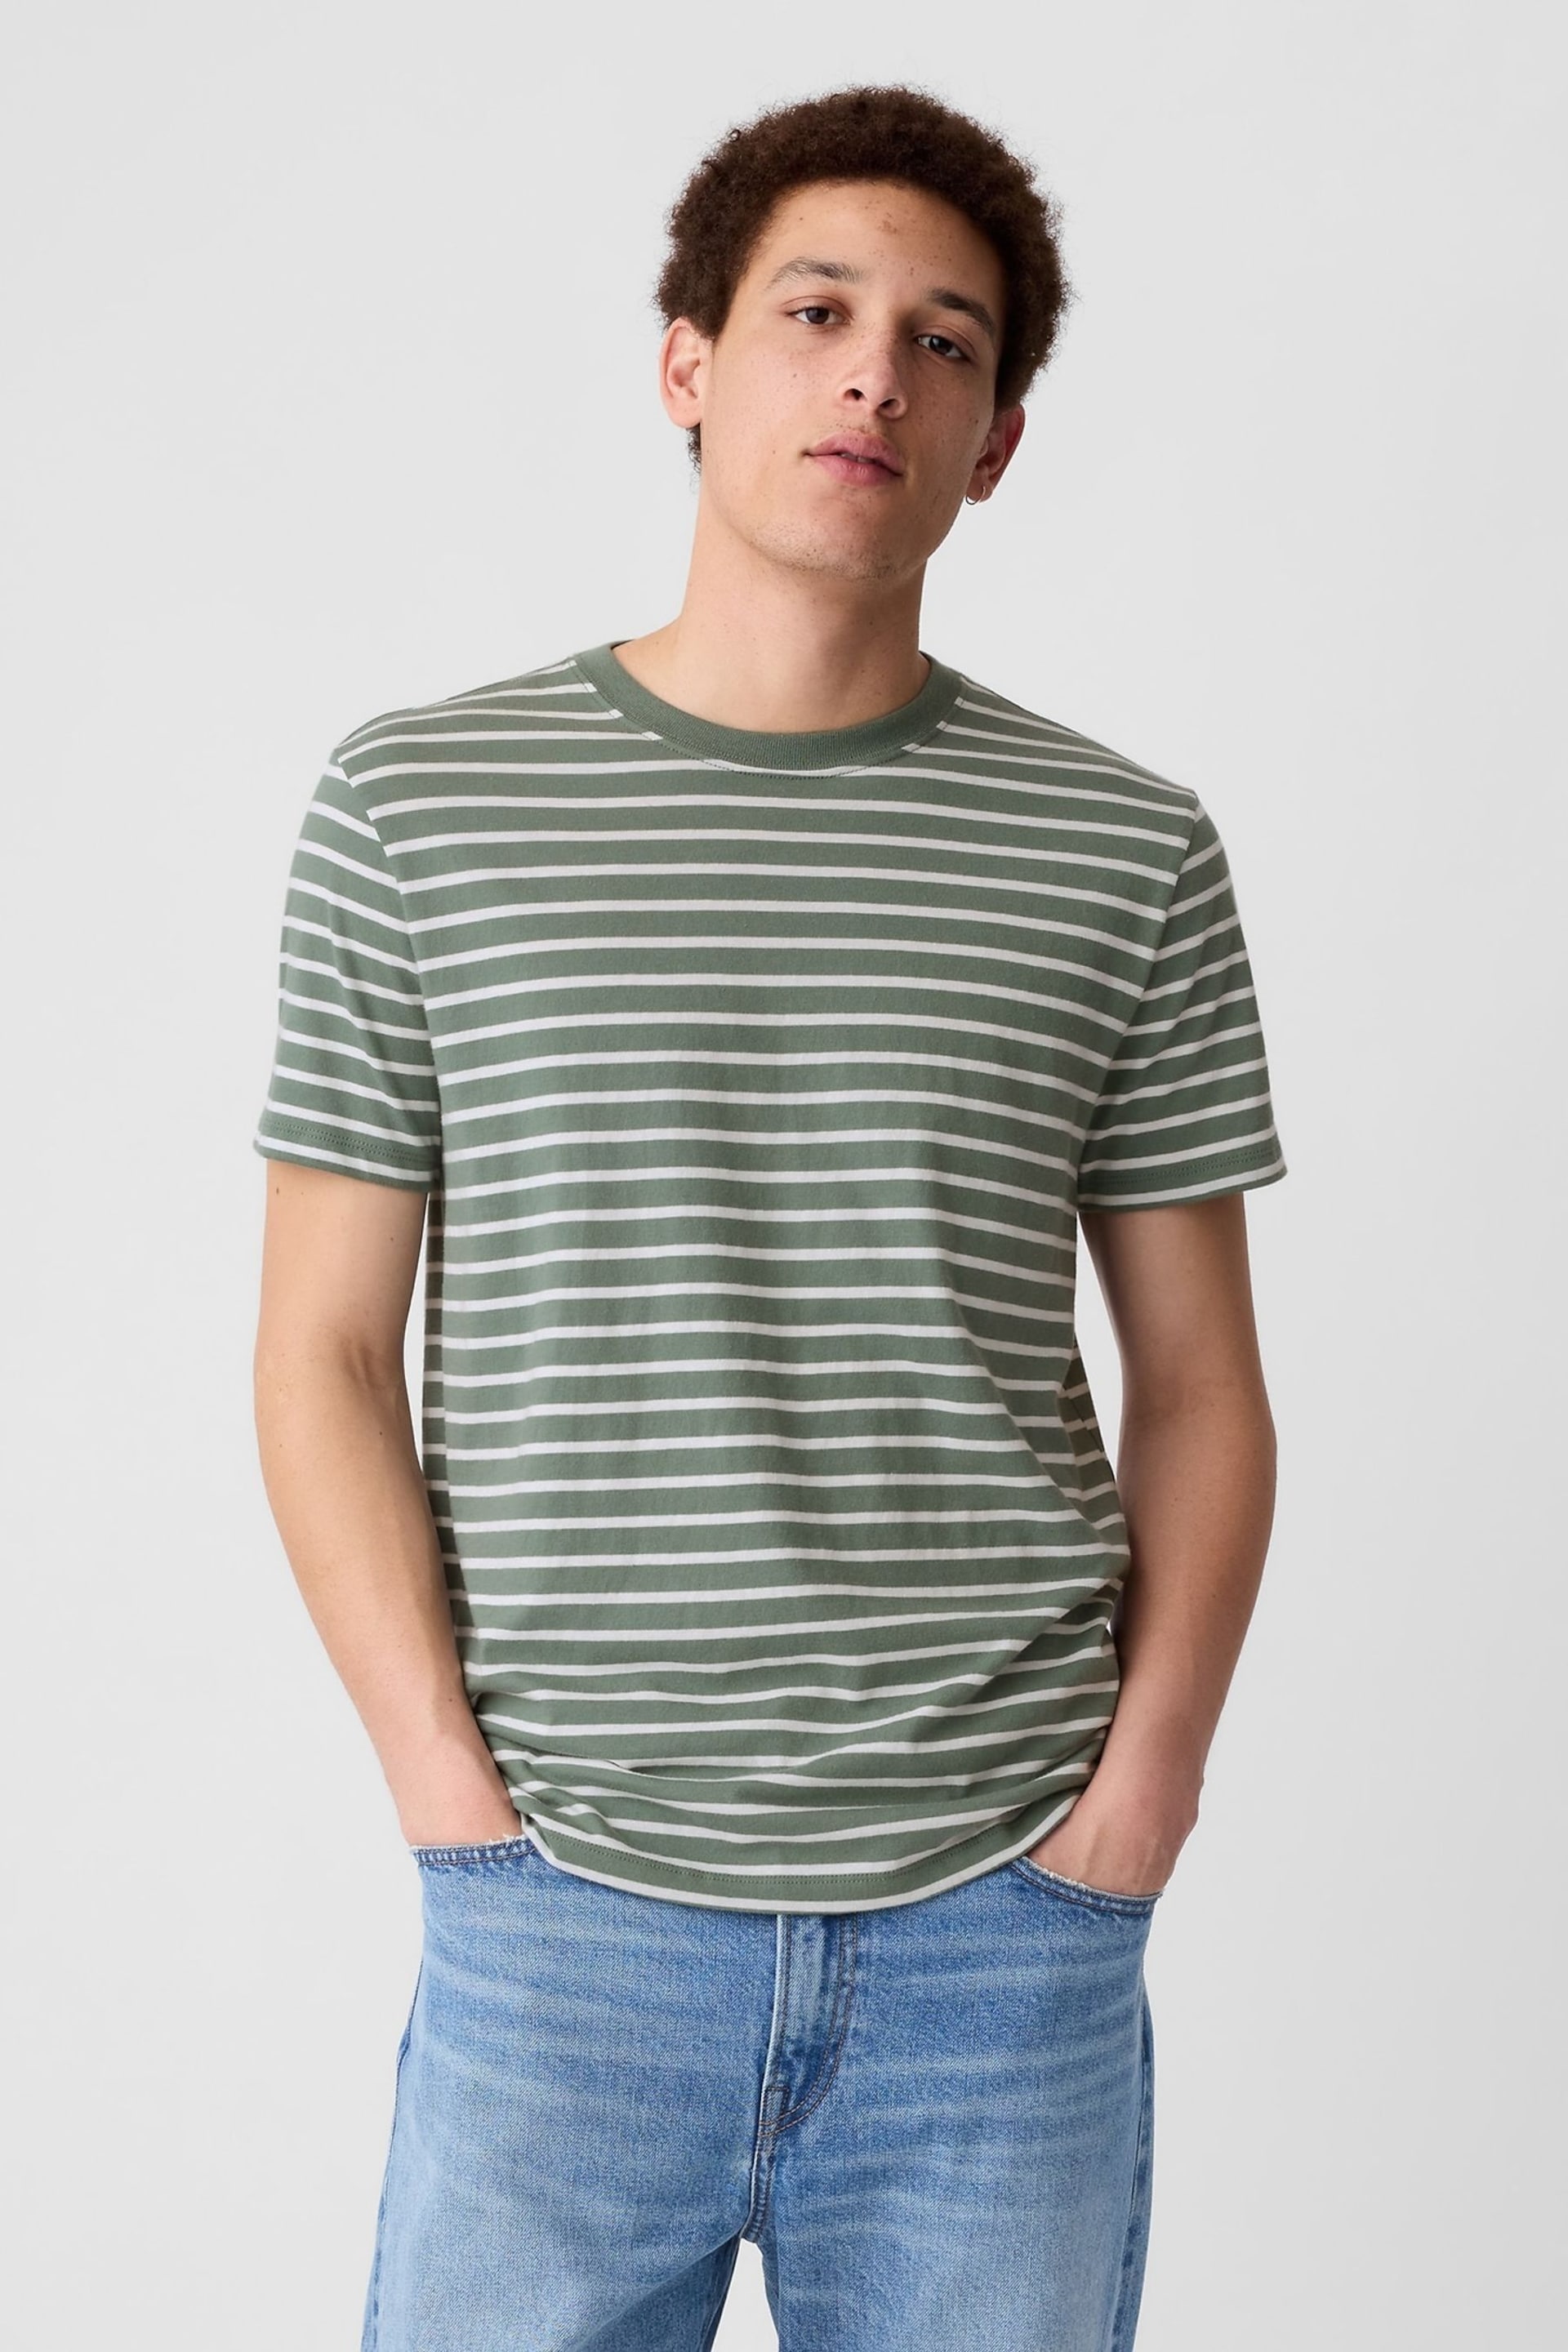 Gap Green Cotton Everyday Soft Stripe T-Shirt - Image 1 of 3